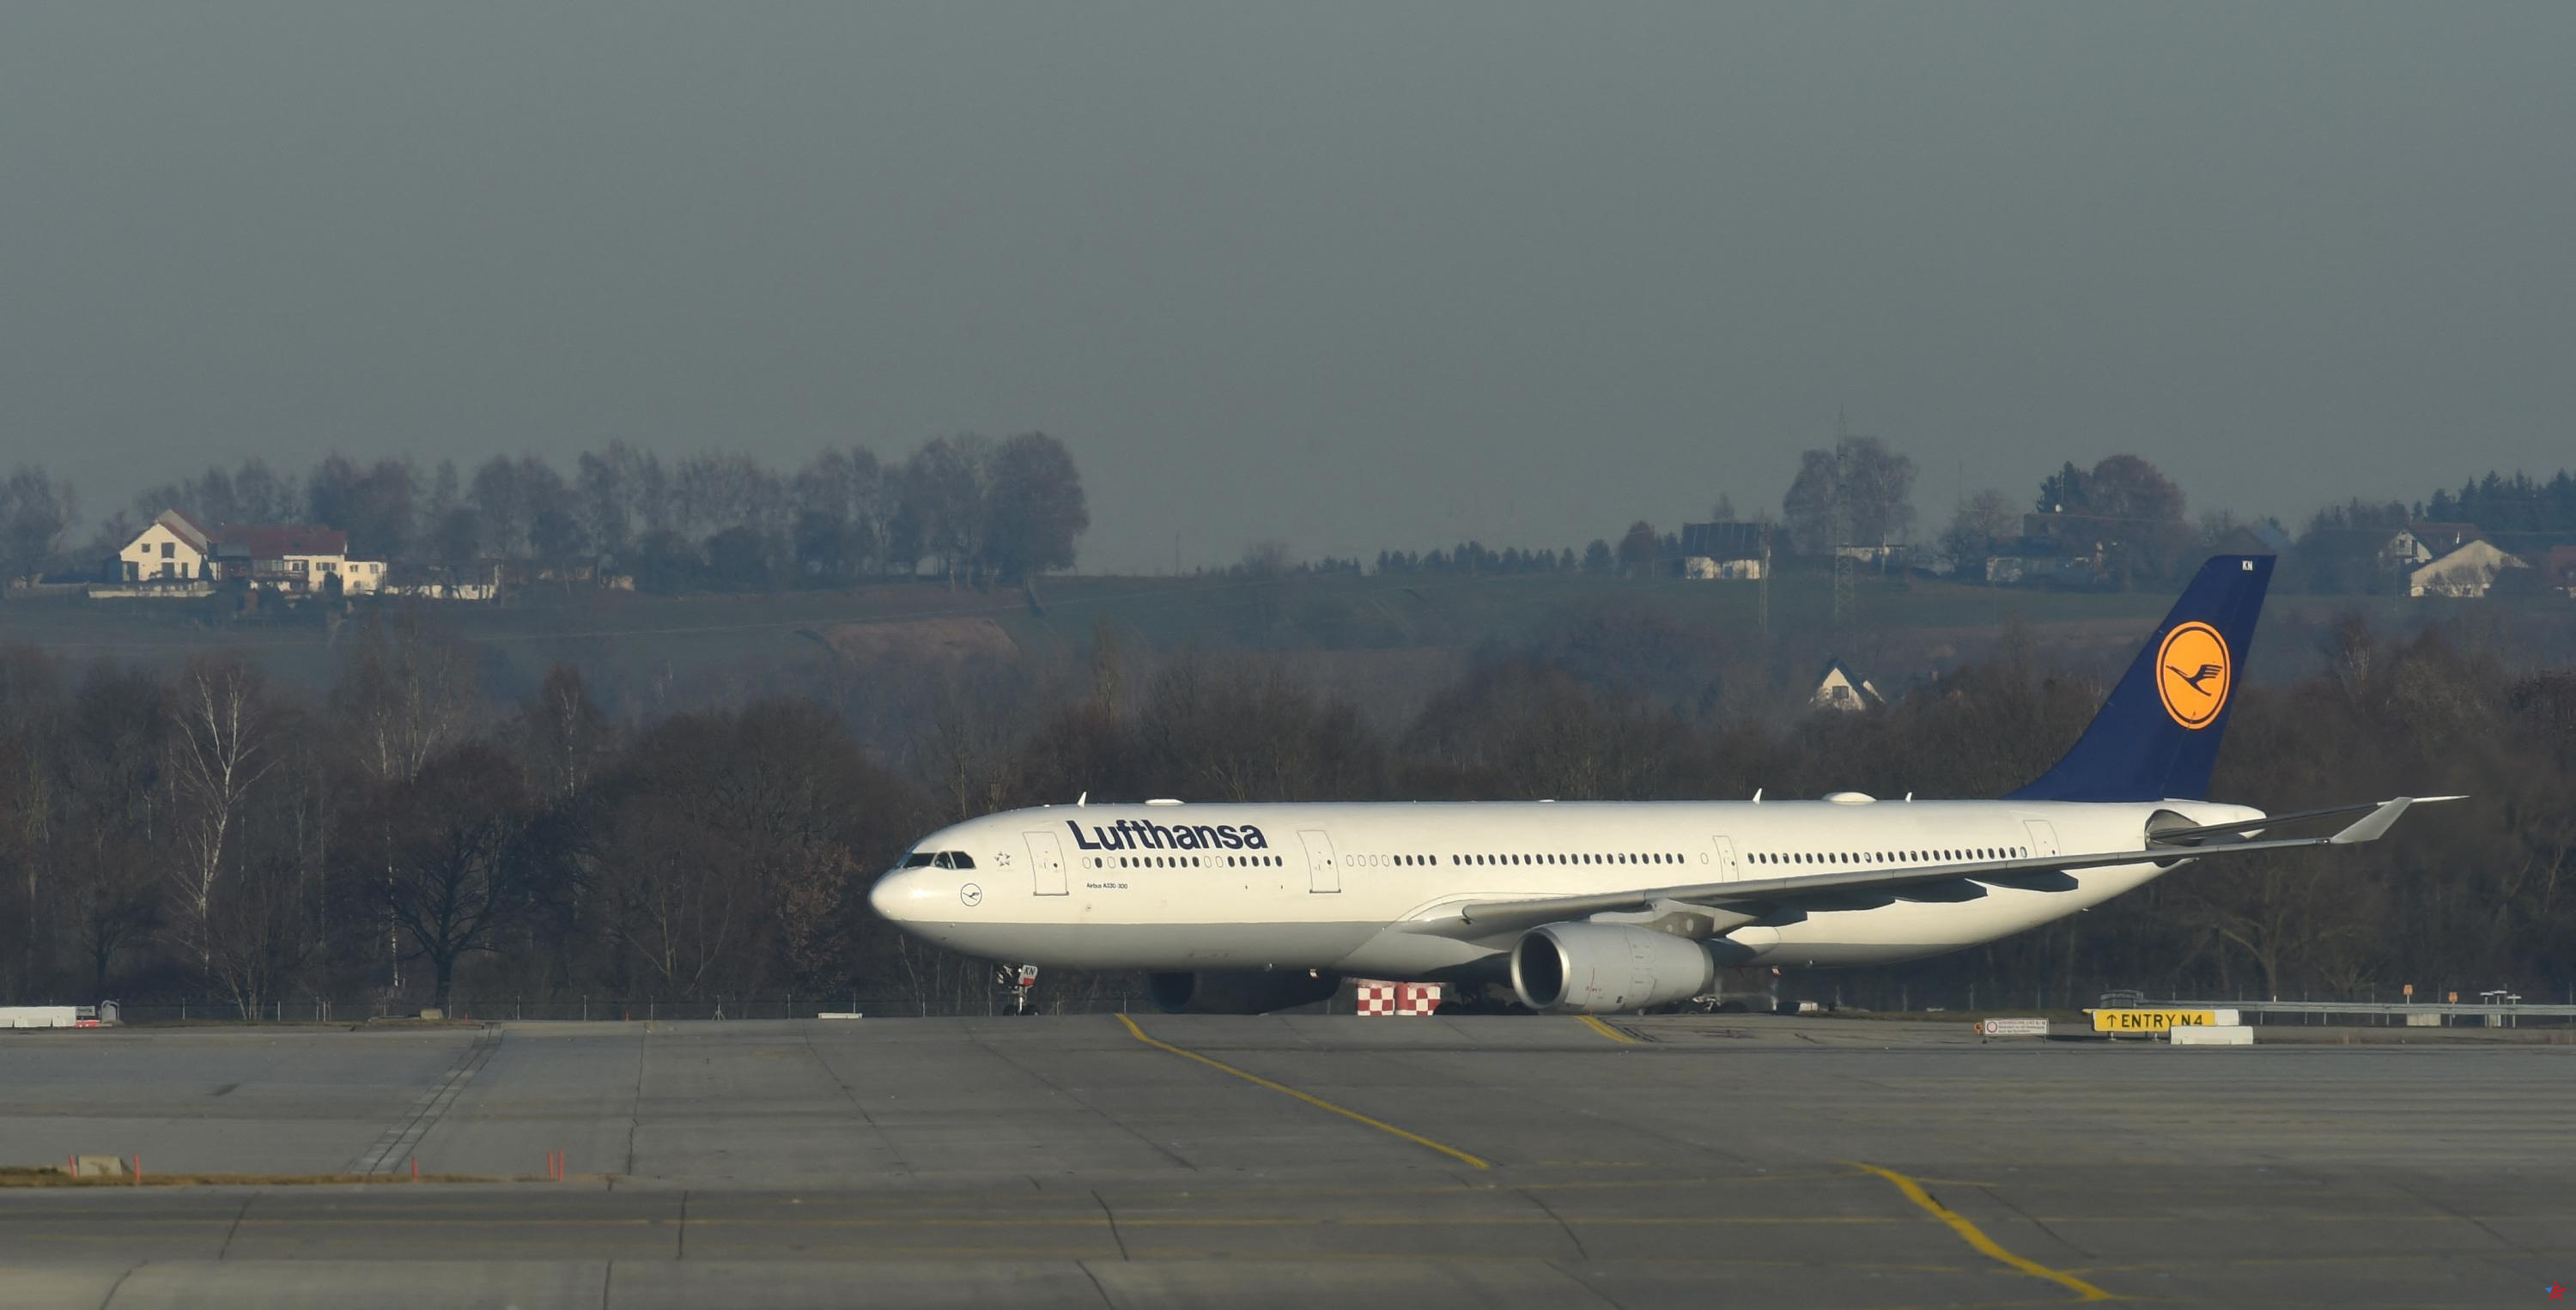 Grecia: un Airbus A330 de Lufthansa realiza un aterrizaje de emergencia por un problema eléctrico